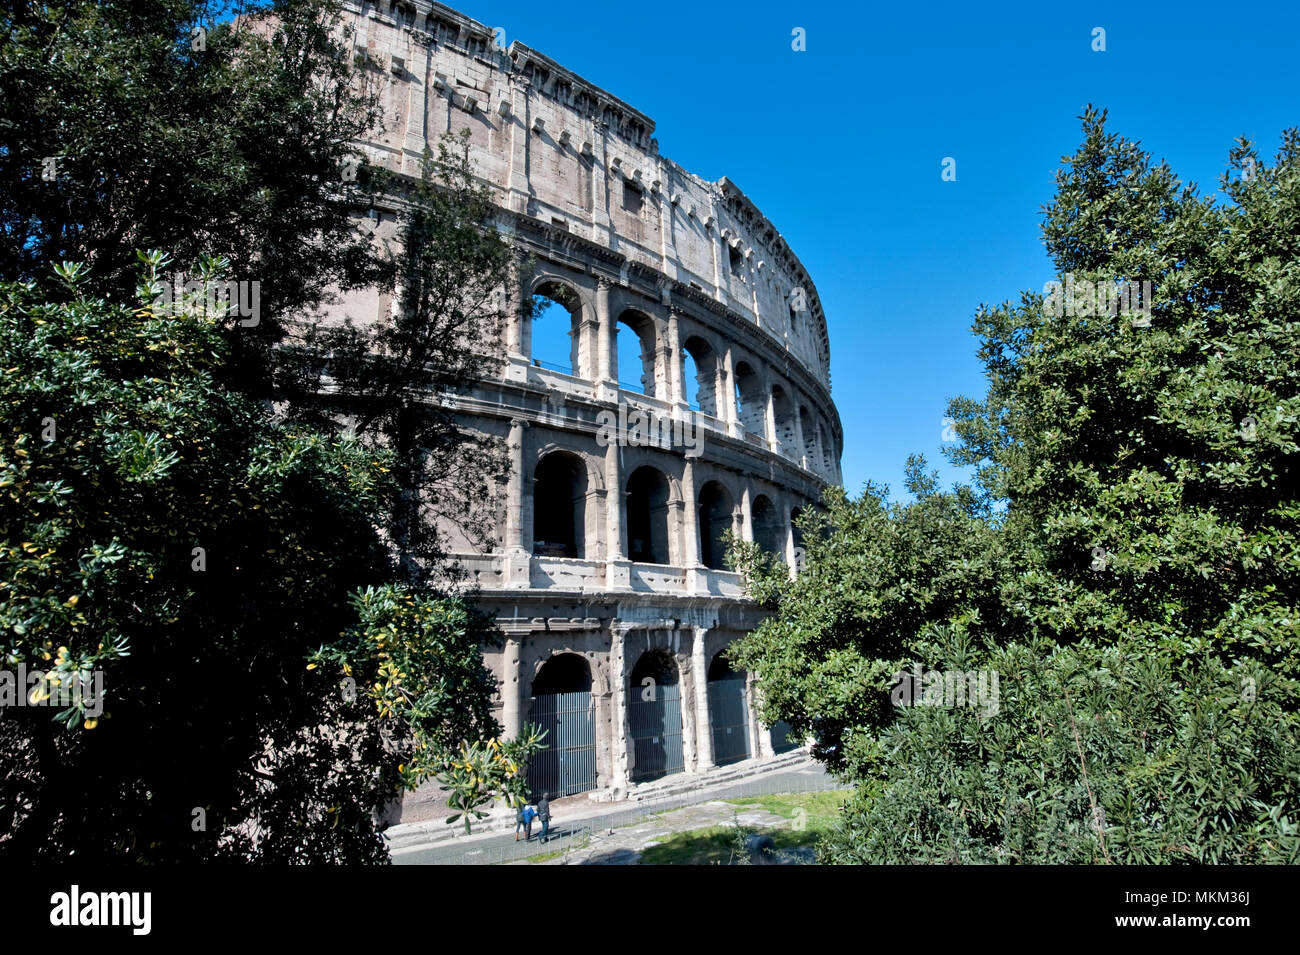 Vista exterior del Coliseo / Roma | Außenansicht von Kolosseum / Rom Foto de stock